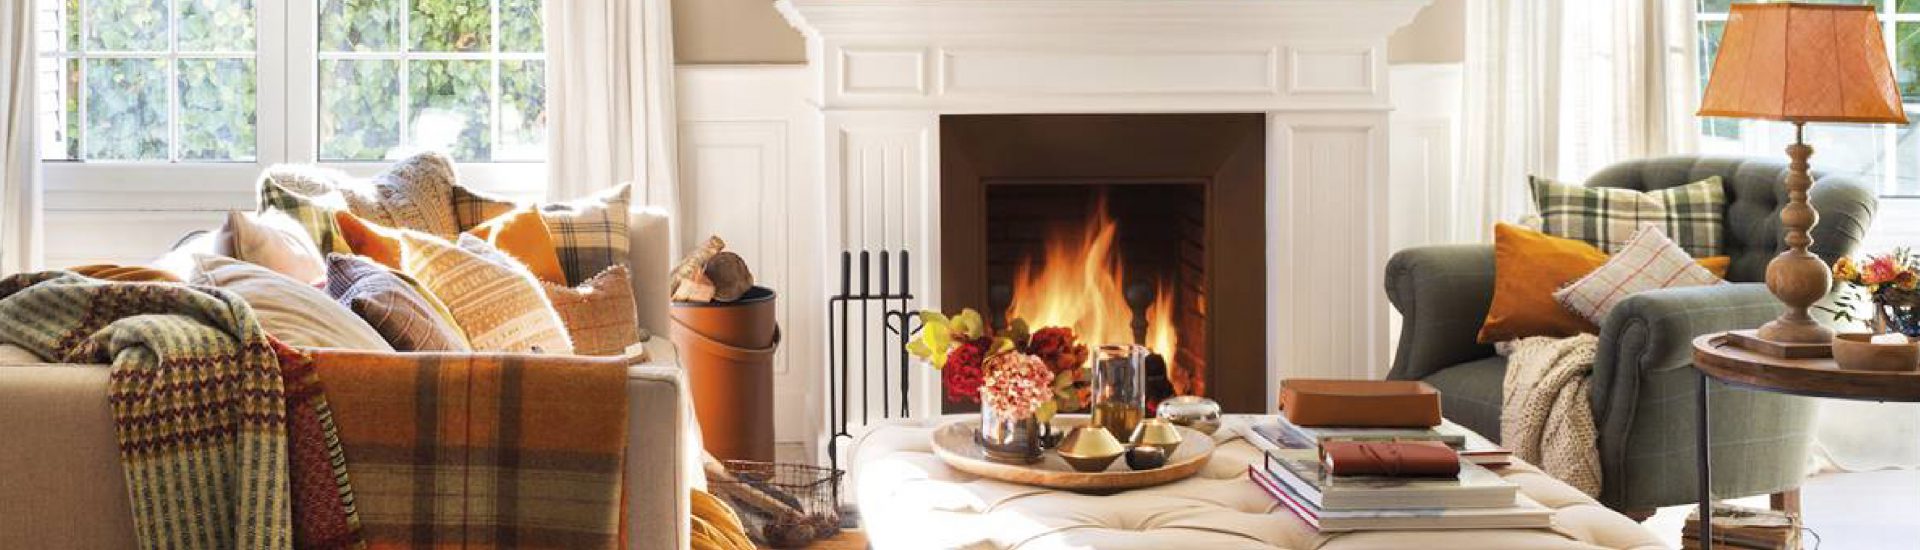 ¡Bienvenido otoño!: 10 tips para redecorar tu hogar